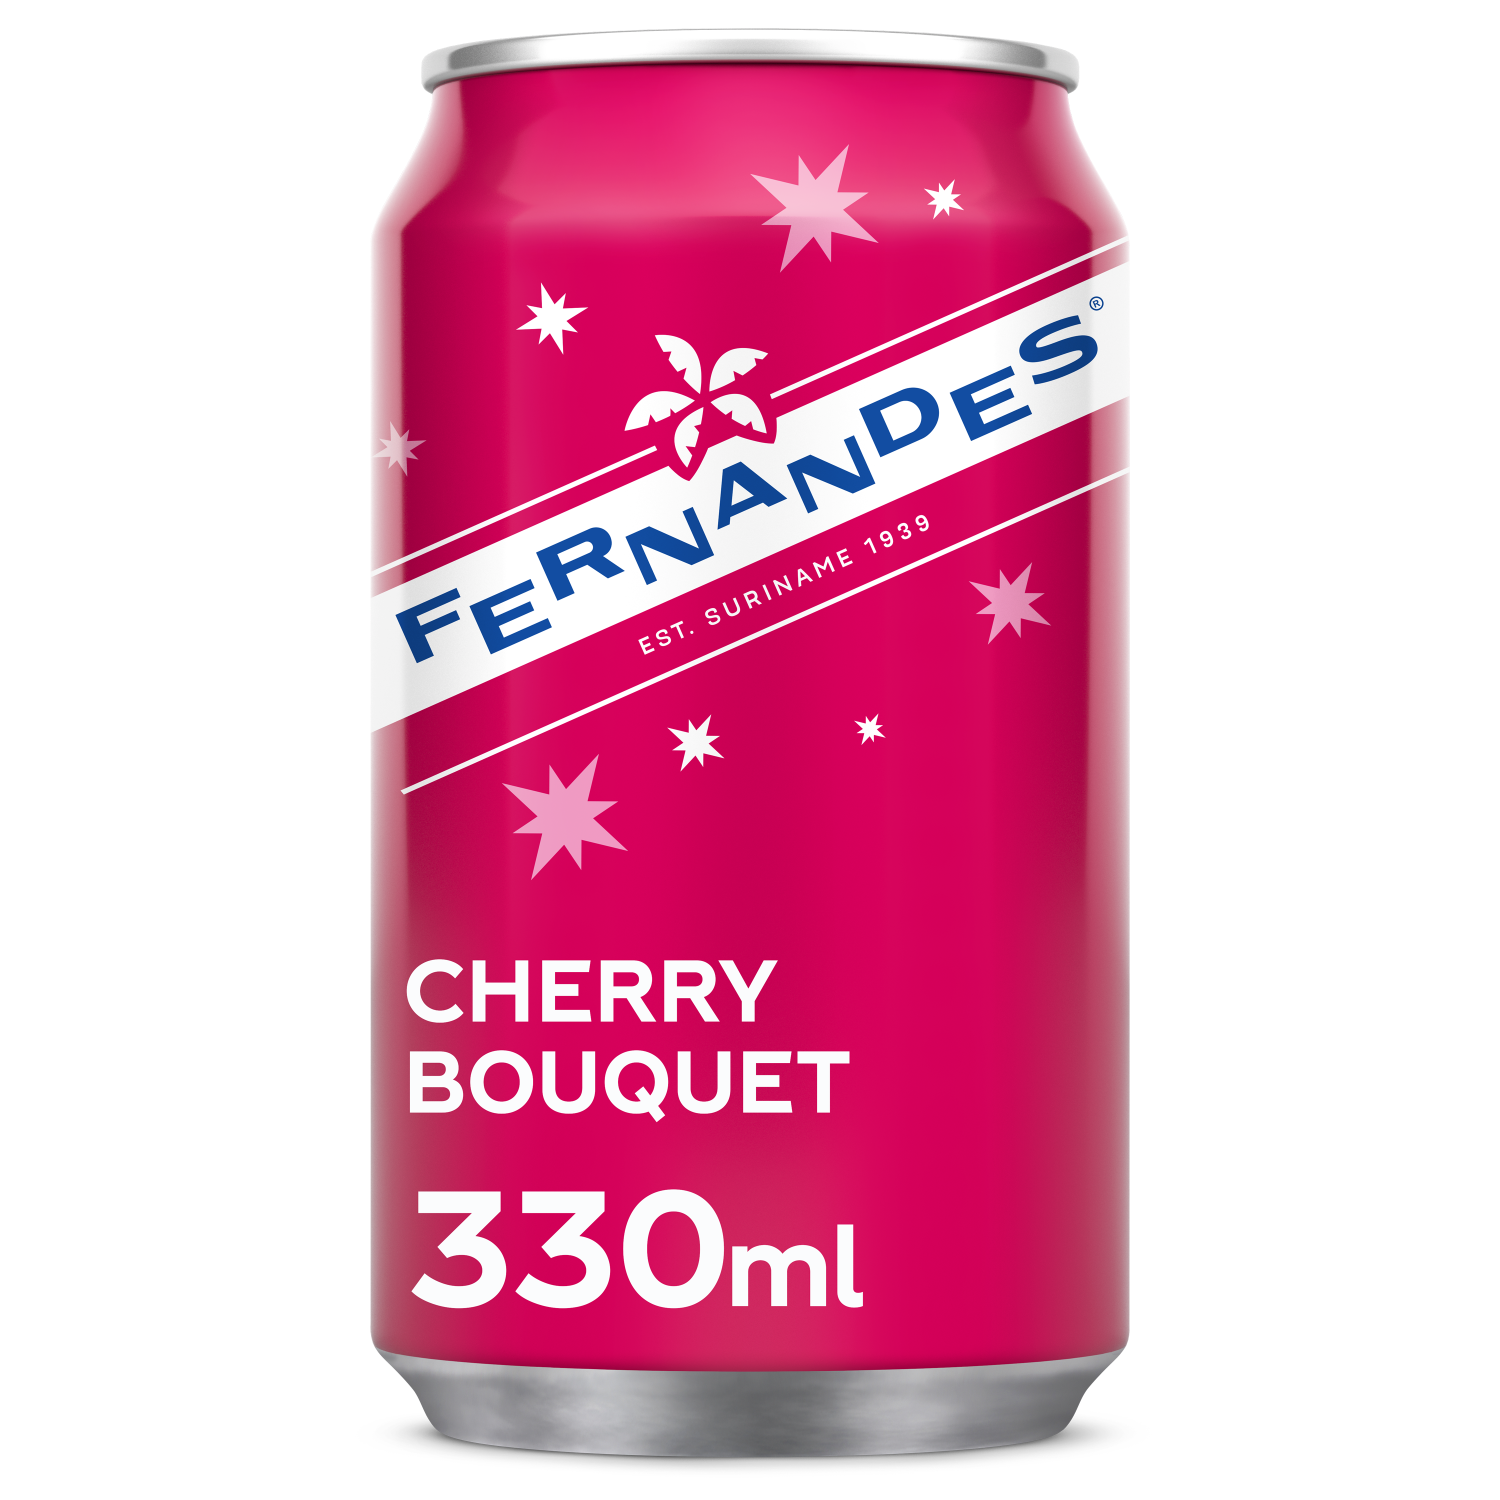 Fernandes Cherry